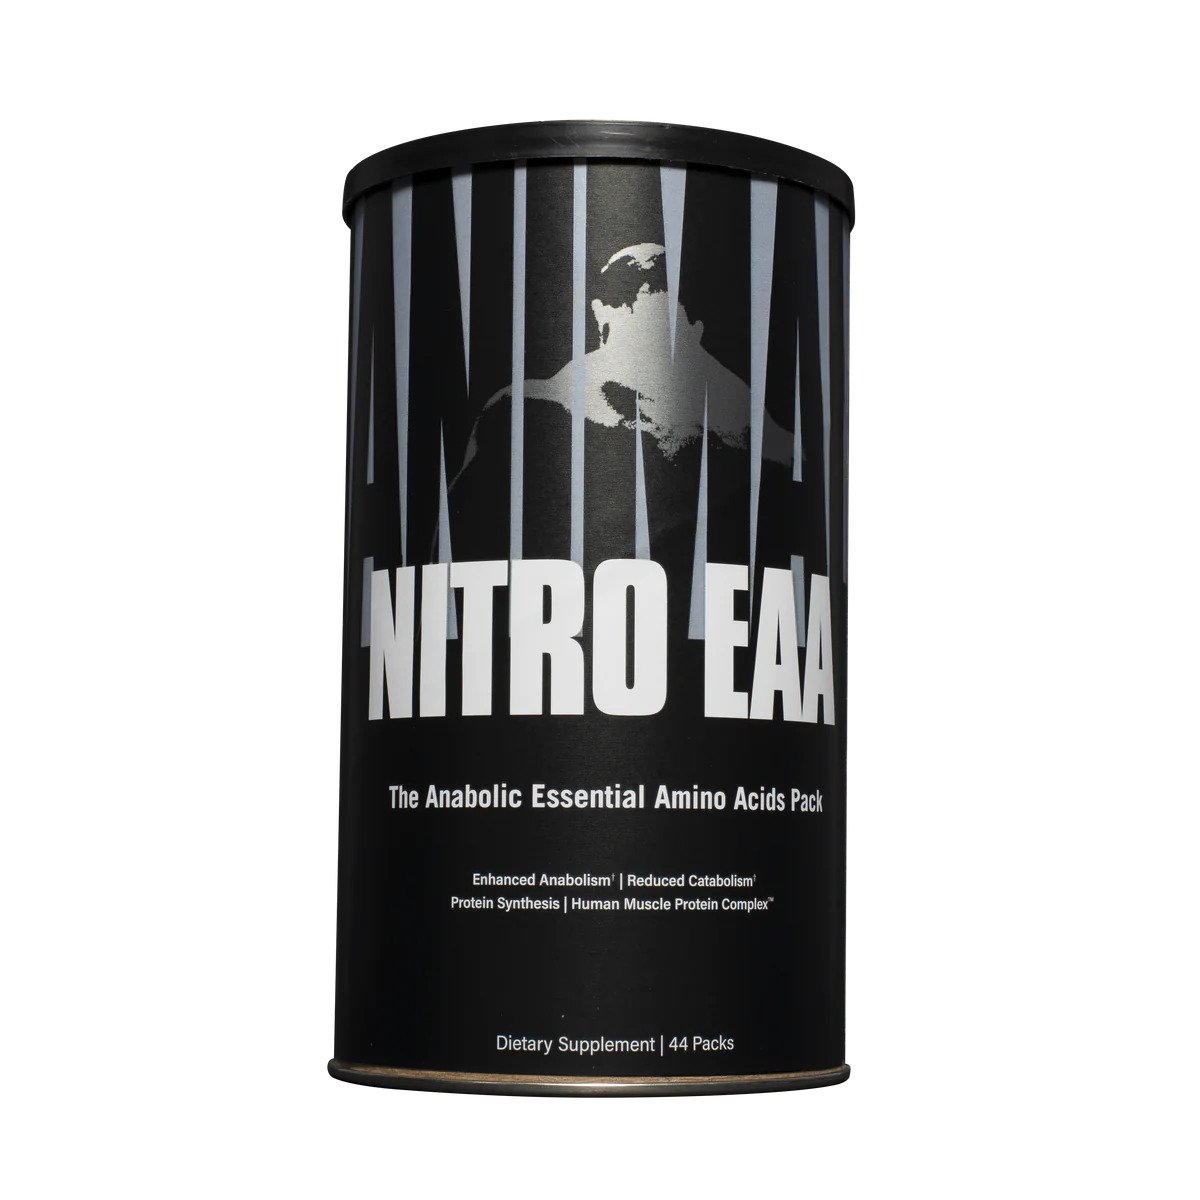 Universal Nutrition Animal Nitro, 44 Packs